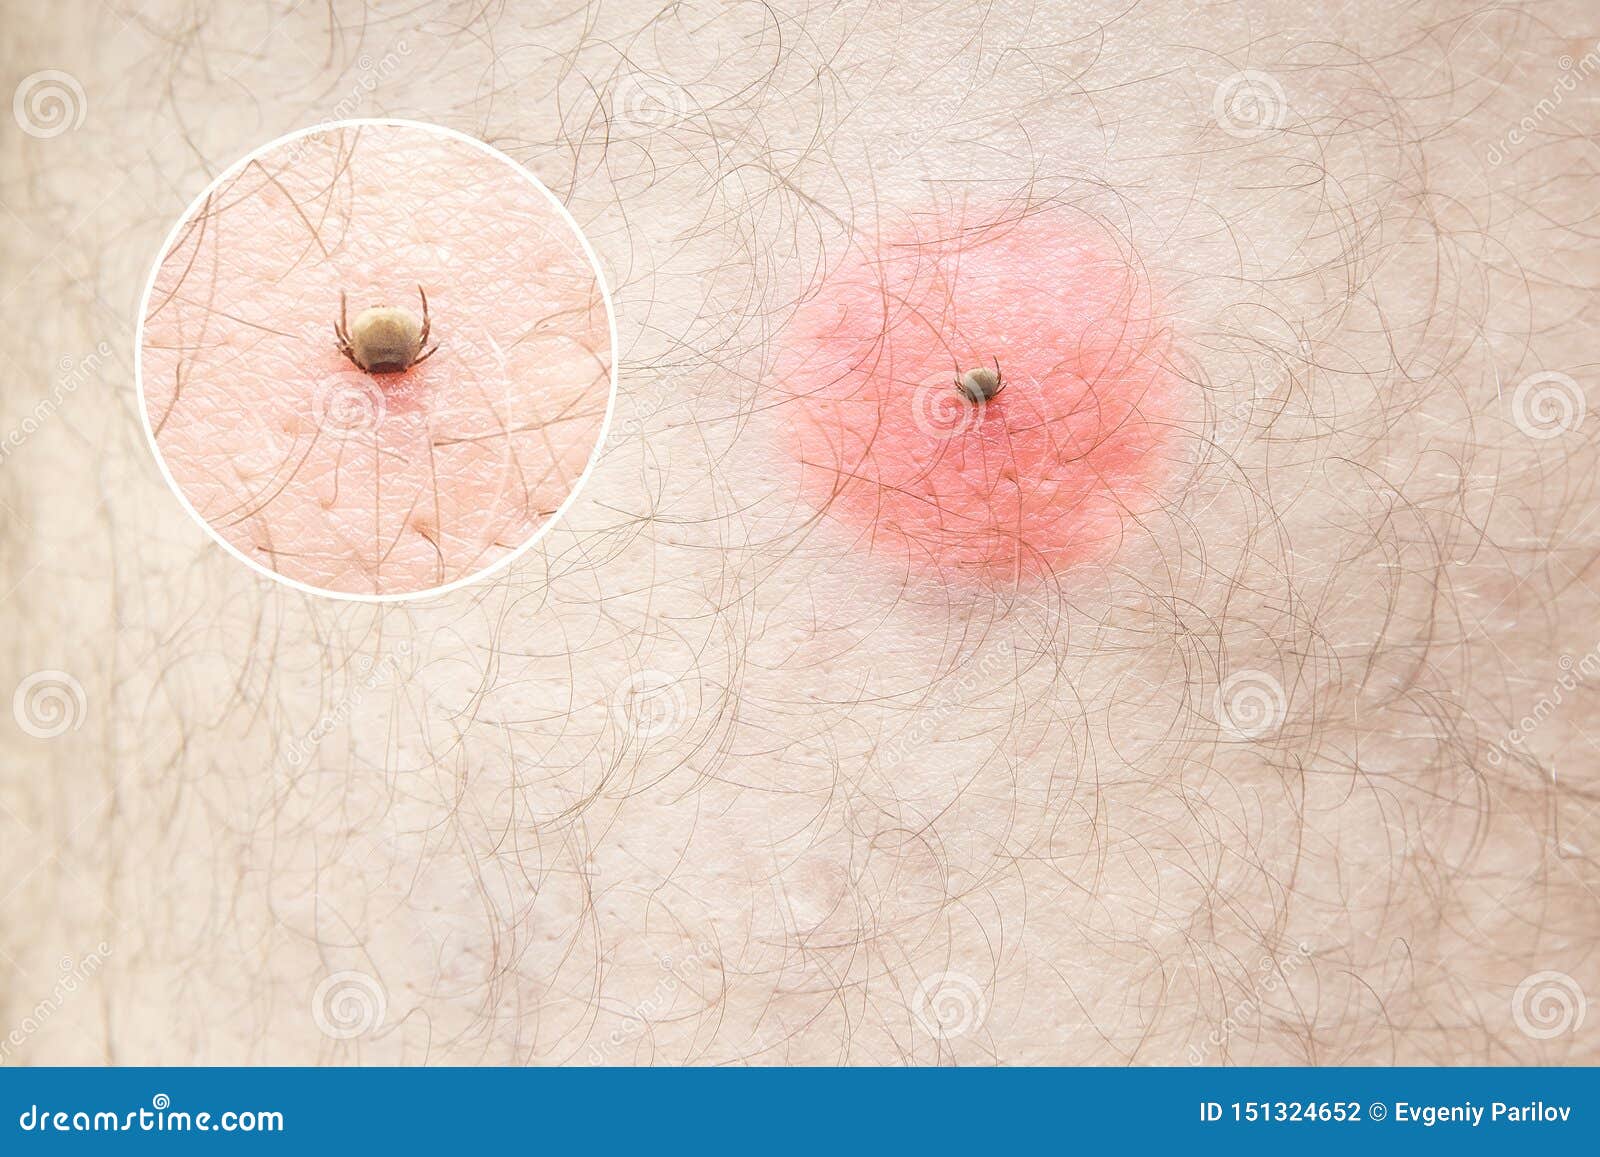 Mite Skin Bite Of The Human Body Macro Photo Stock Photo Image Of